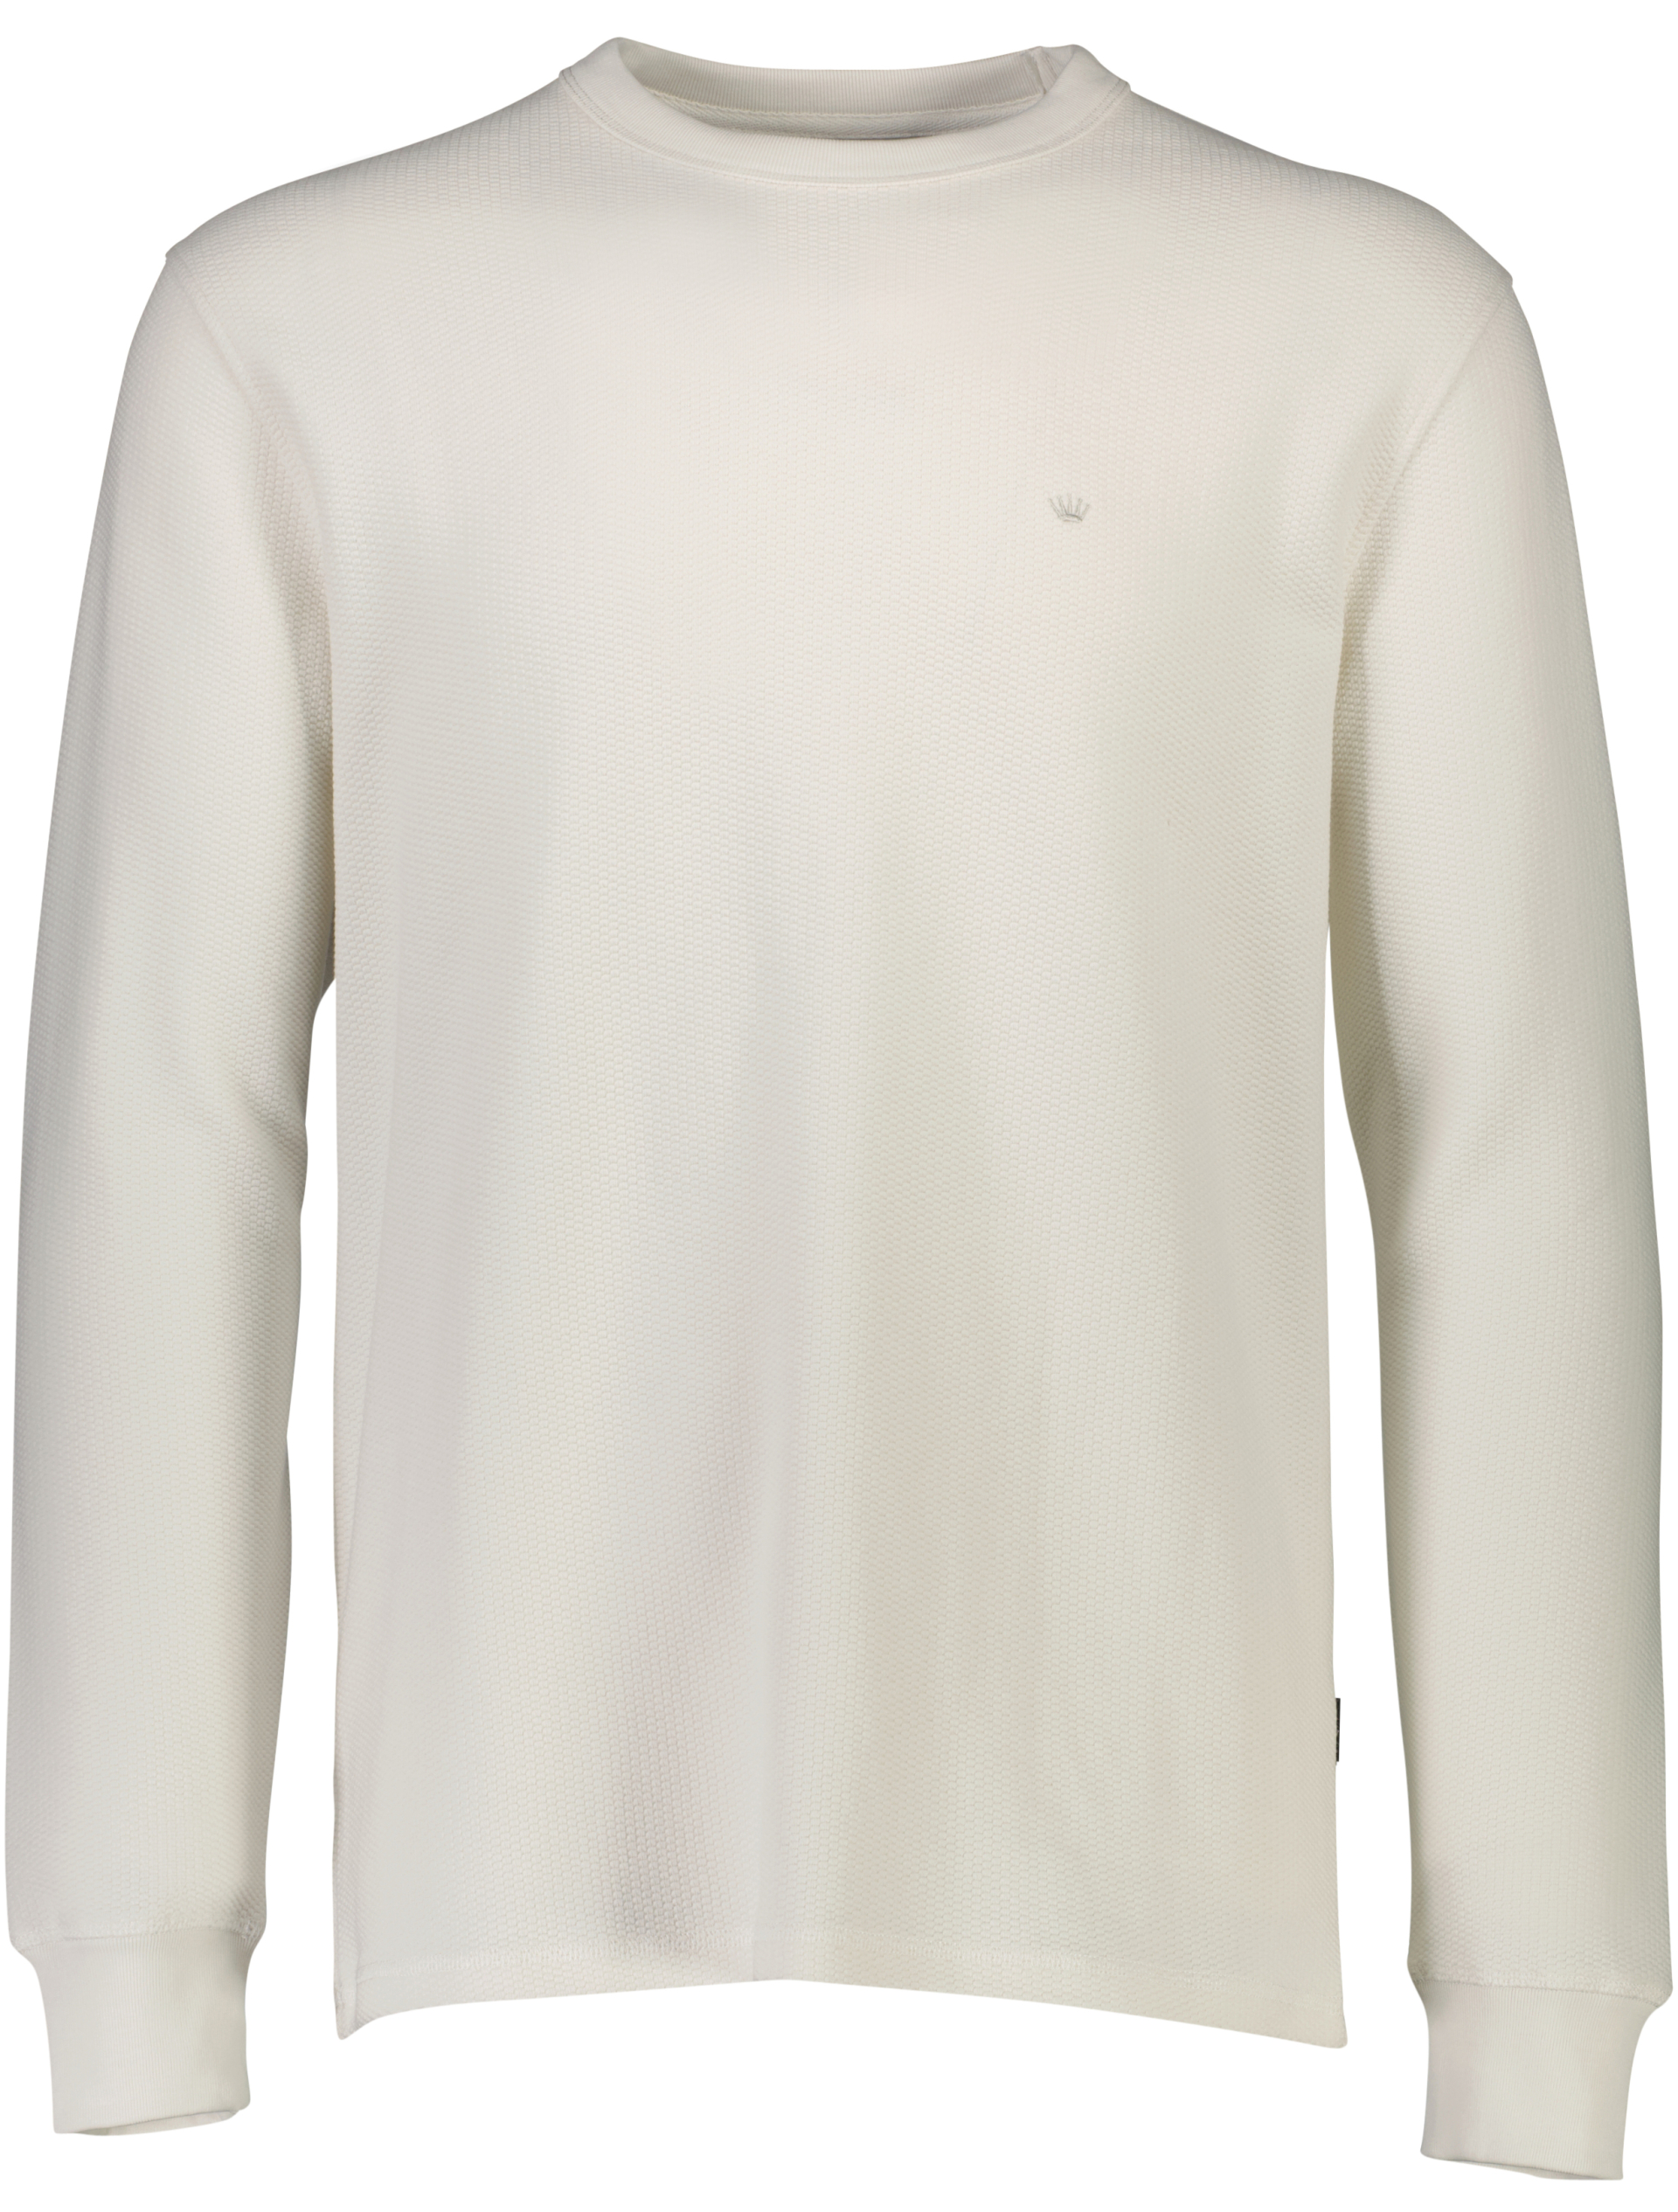 Junk de Luxe Sweatshirt vit / off white